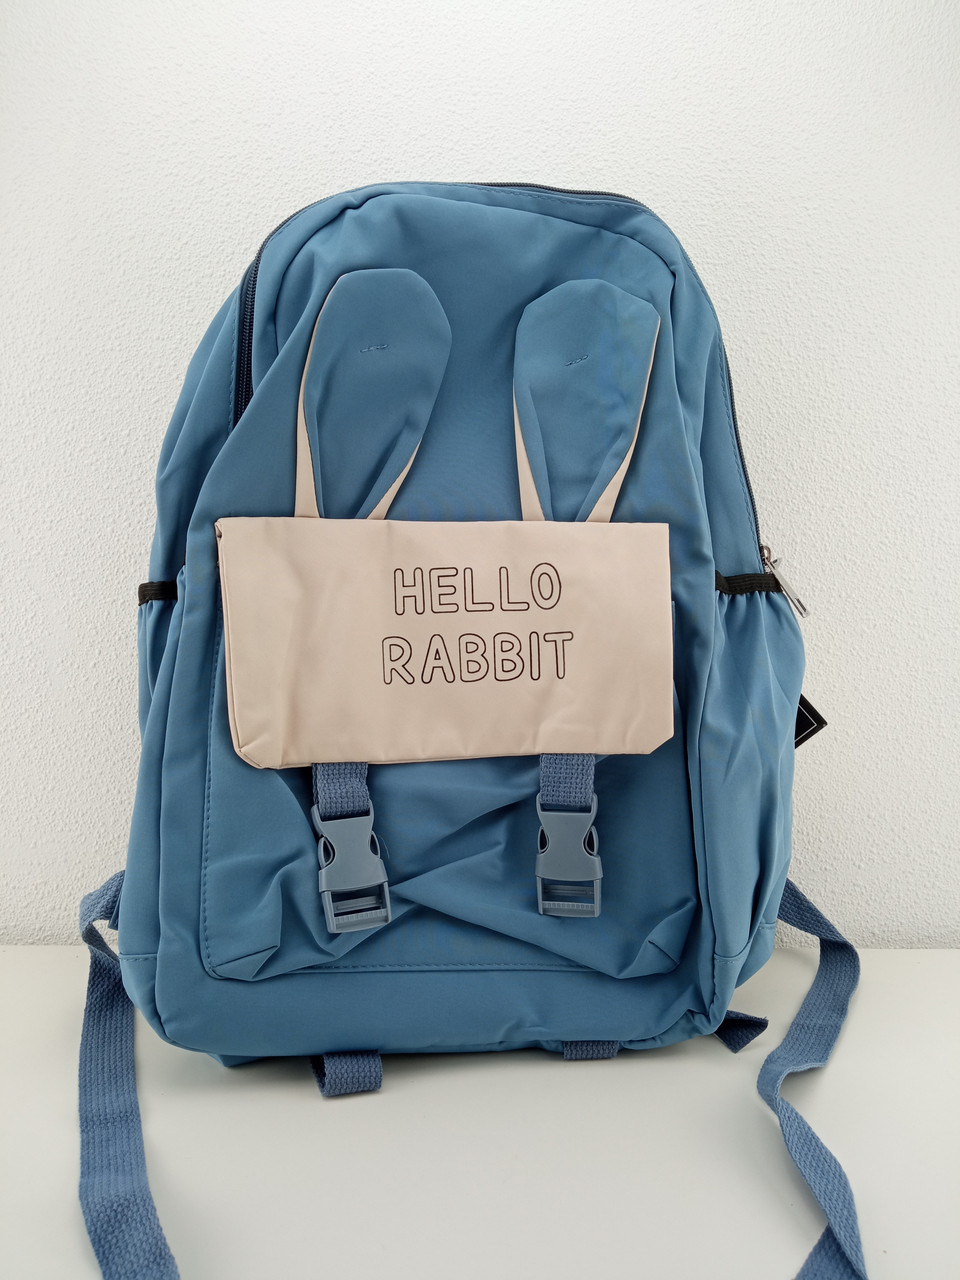 Рюкзак Hello Rabbit синий 40 х 30 см